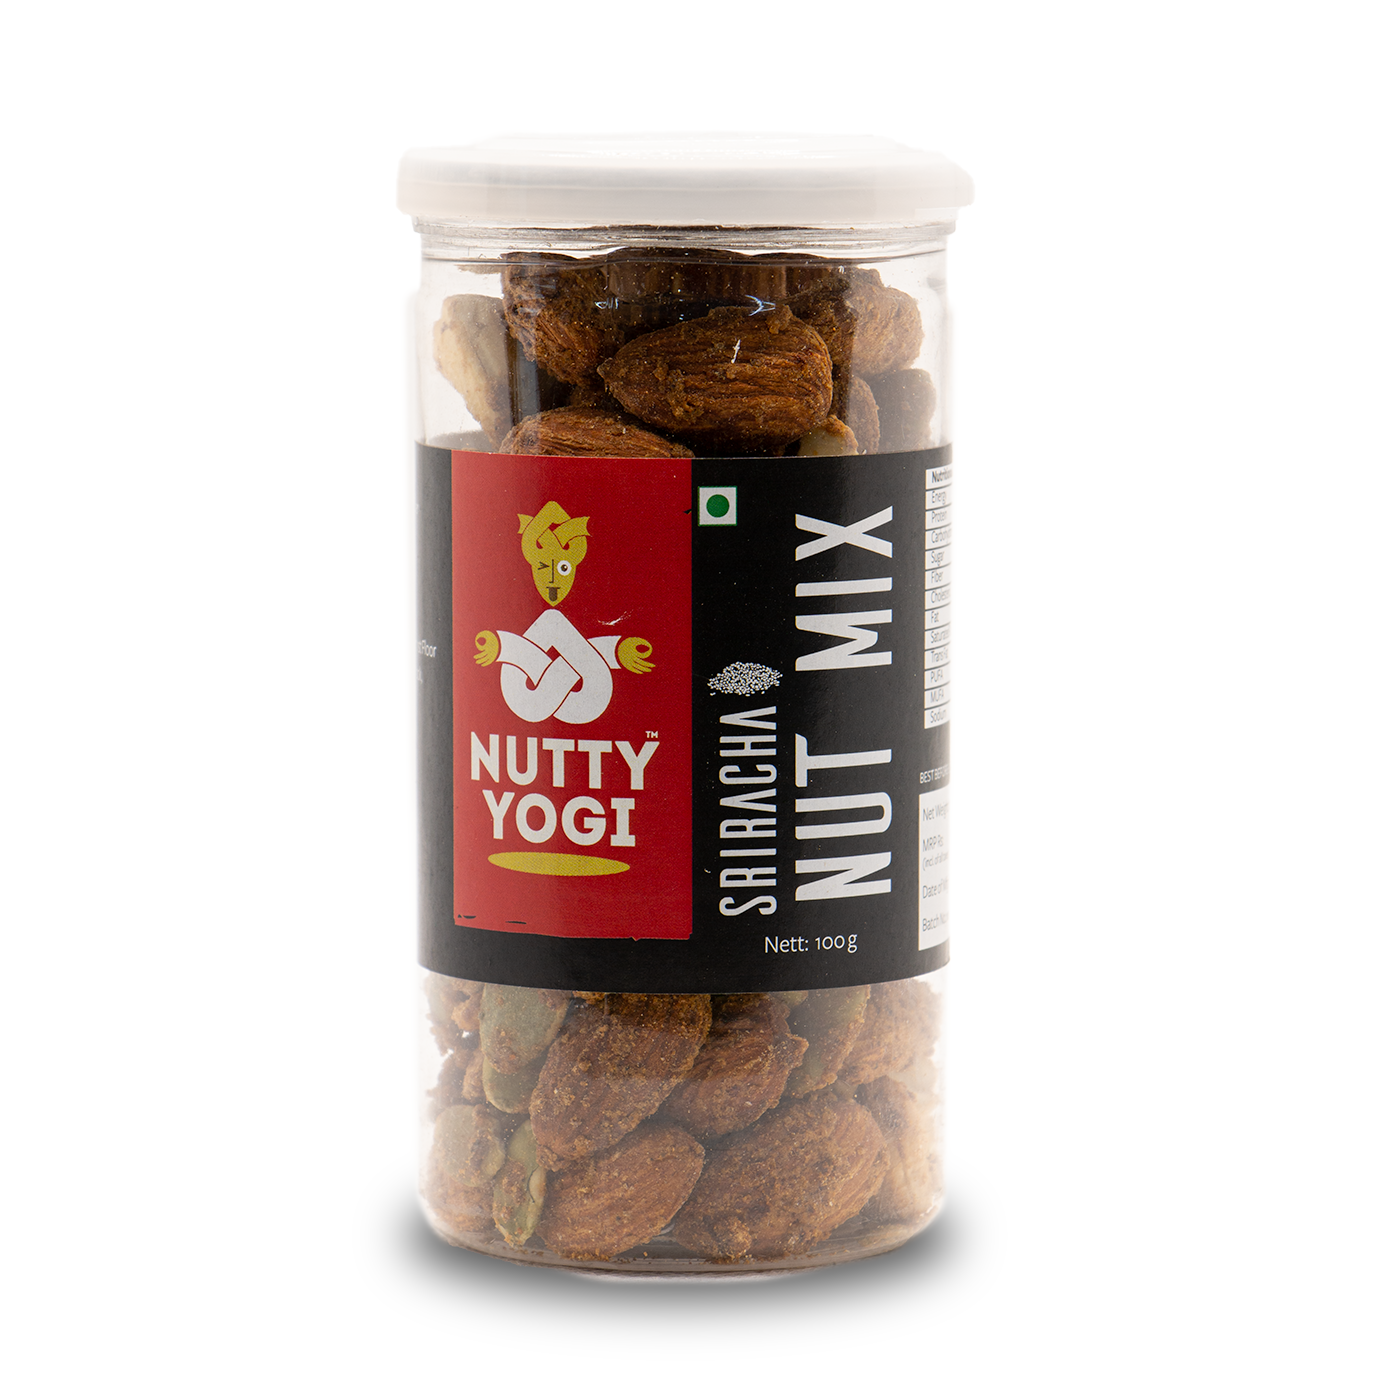 Nutty Yogi Fitness Trail Mix (Fruit & Nut Trail Mix, Keto Superseeds Mix, Sriracha Nut Mix) 450g